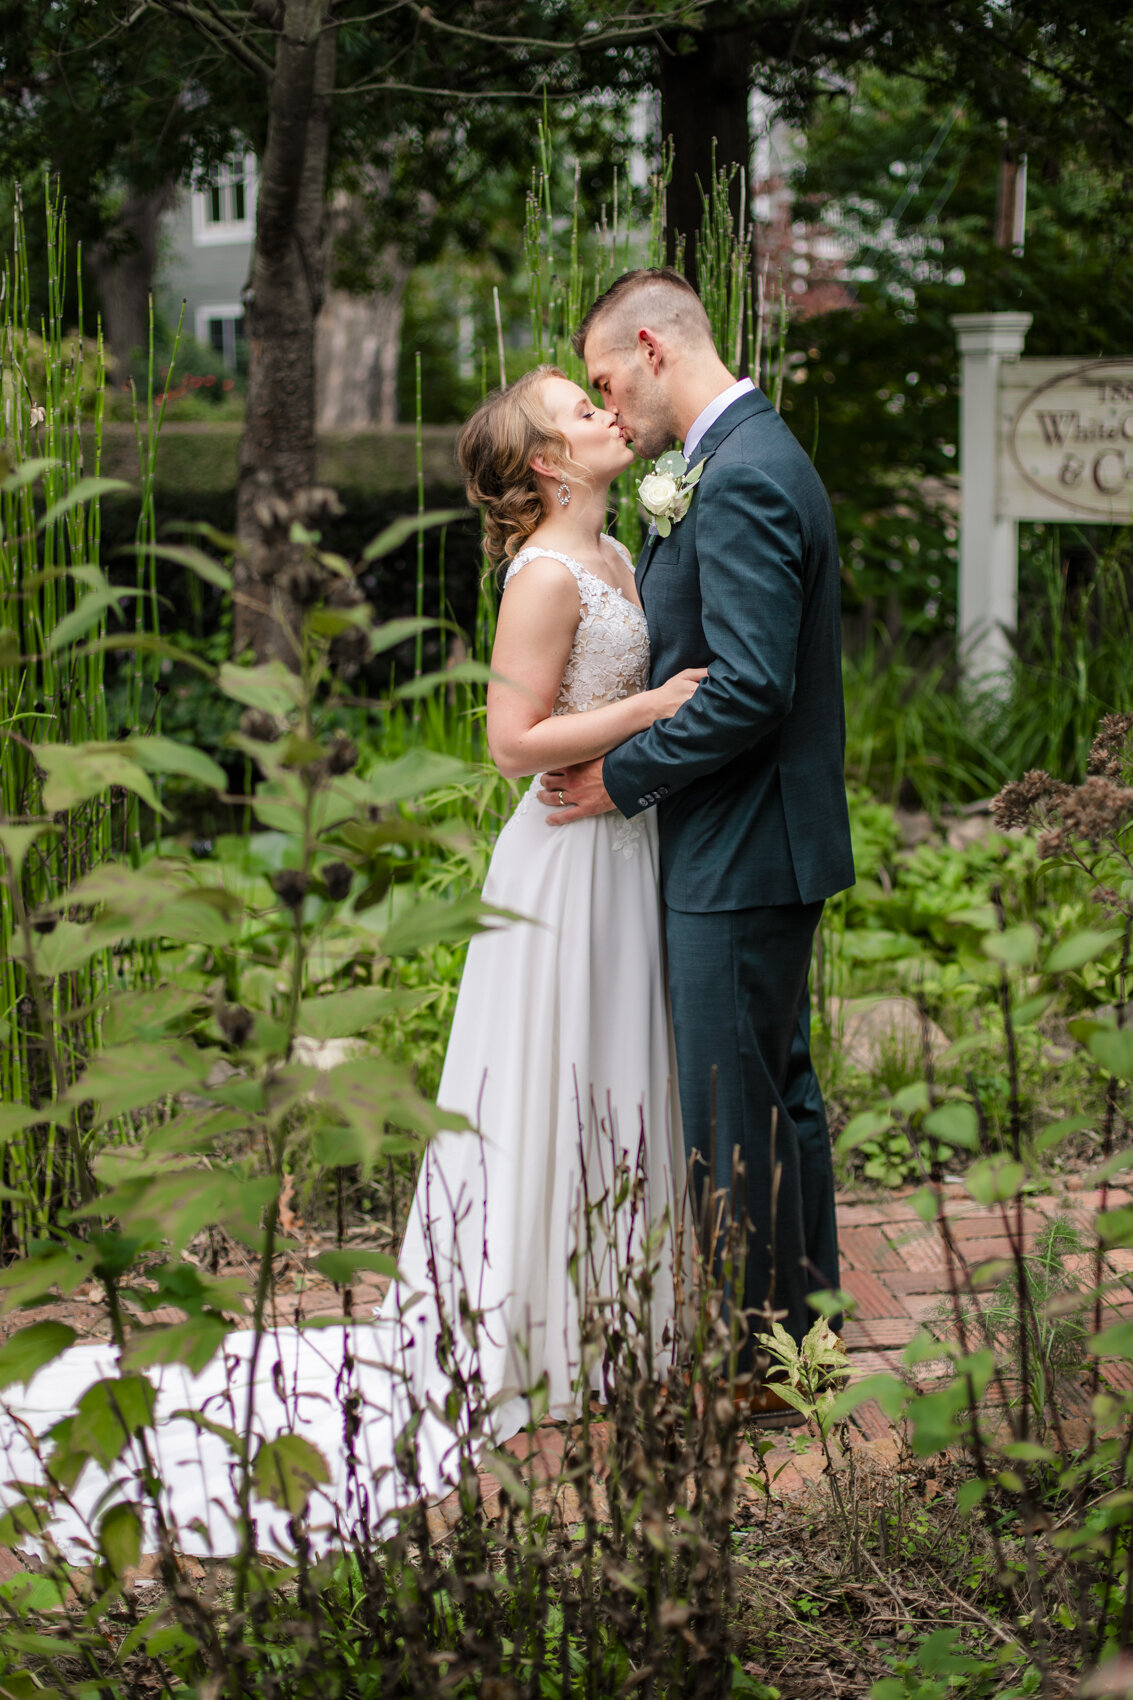 Katelynn and Kyle Wedding at WhiteGate Inn and Cottage Asheville NC_photos by Studio Misha_BLOG-51.jpg